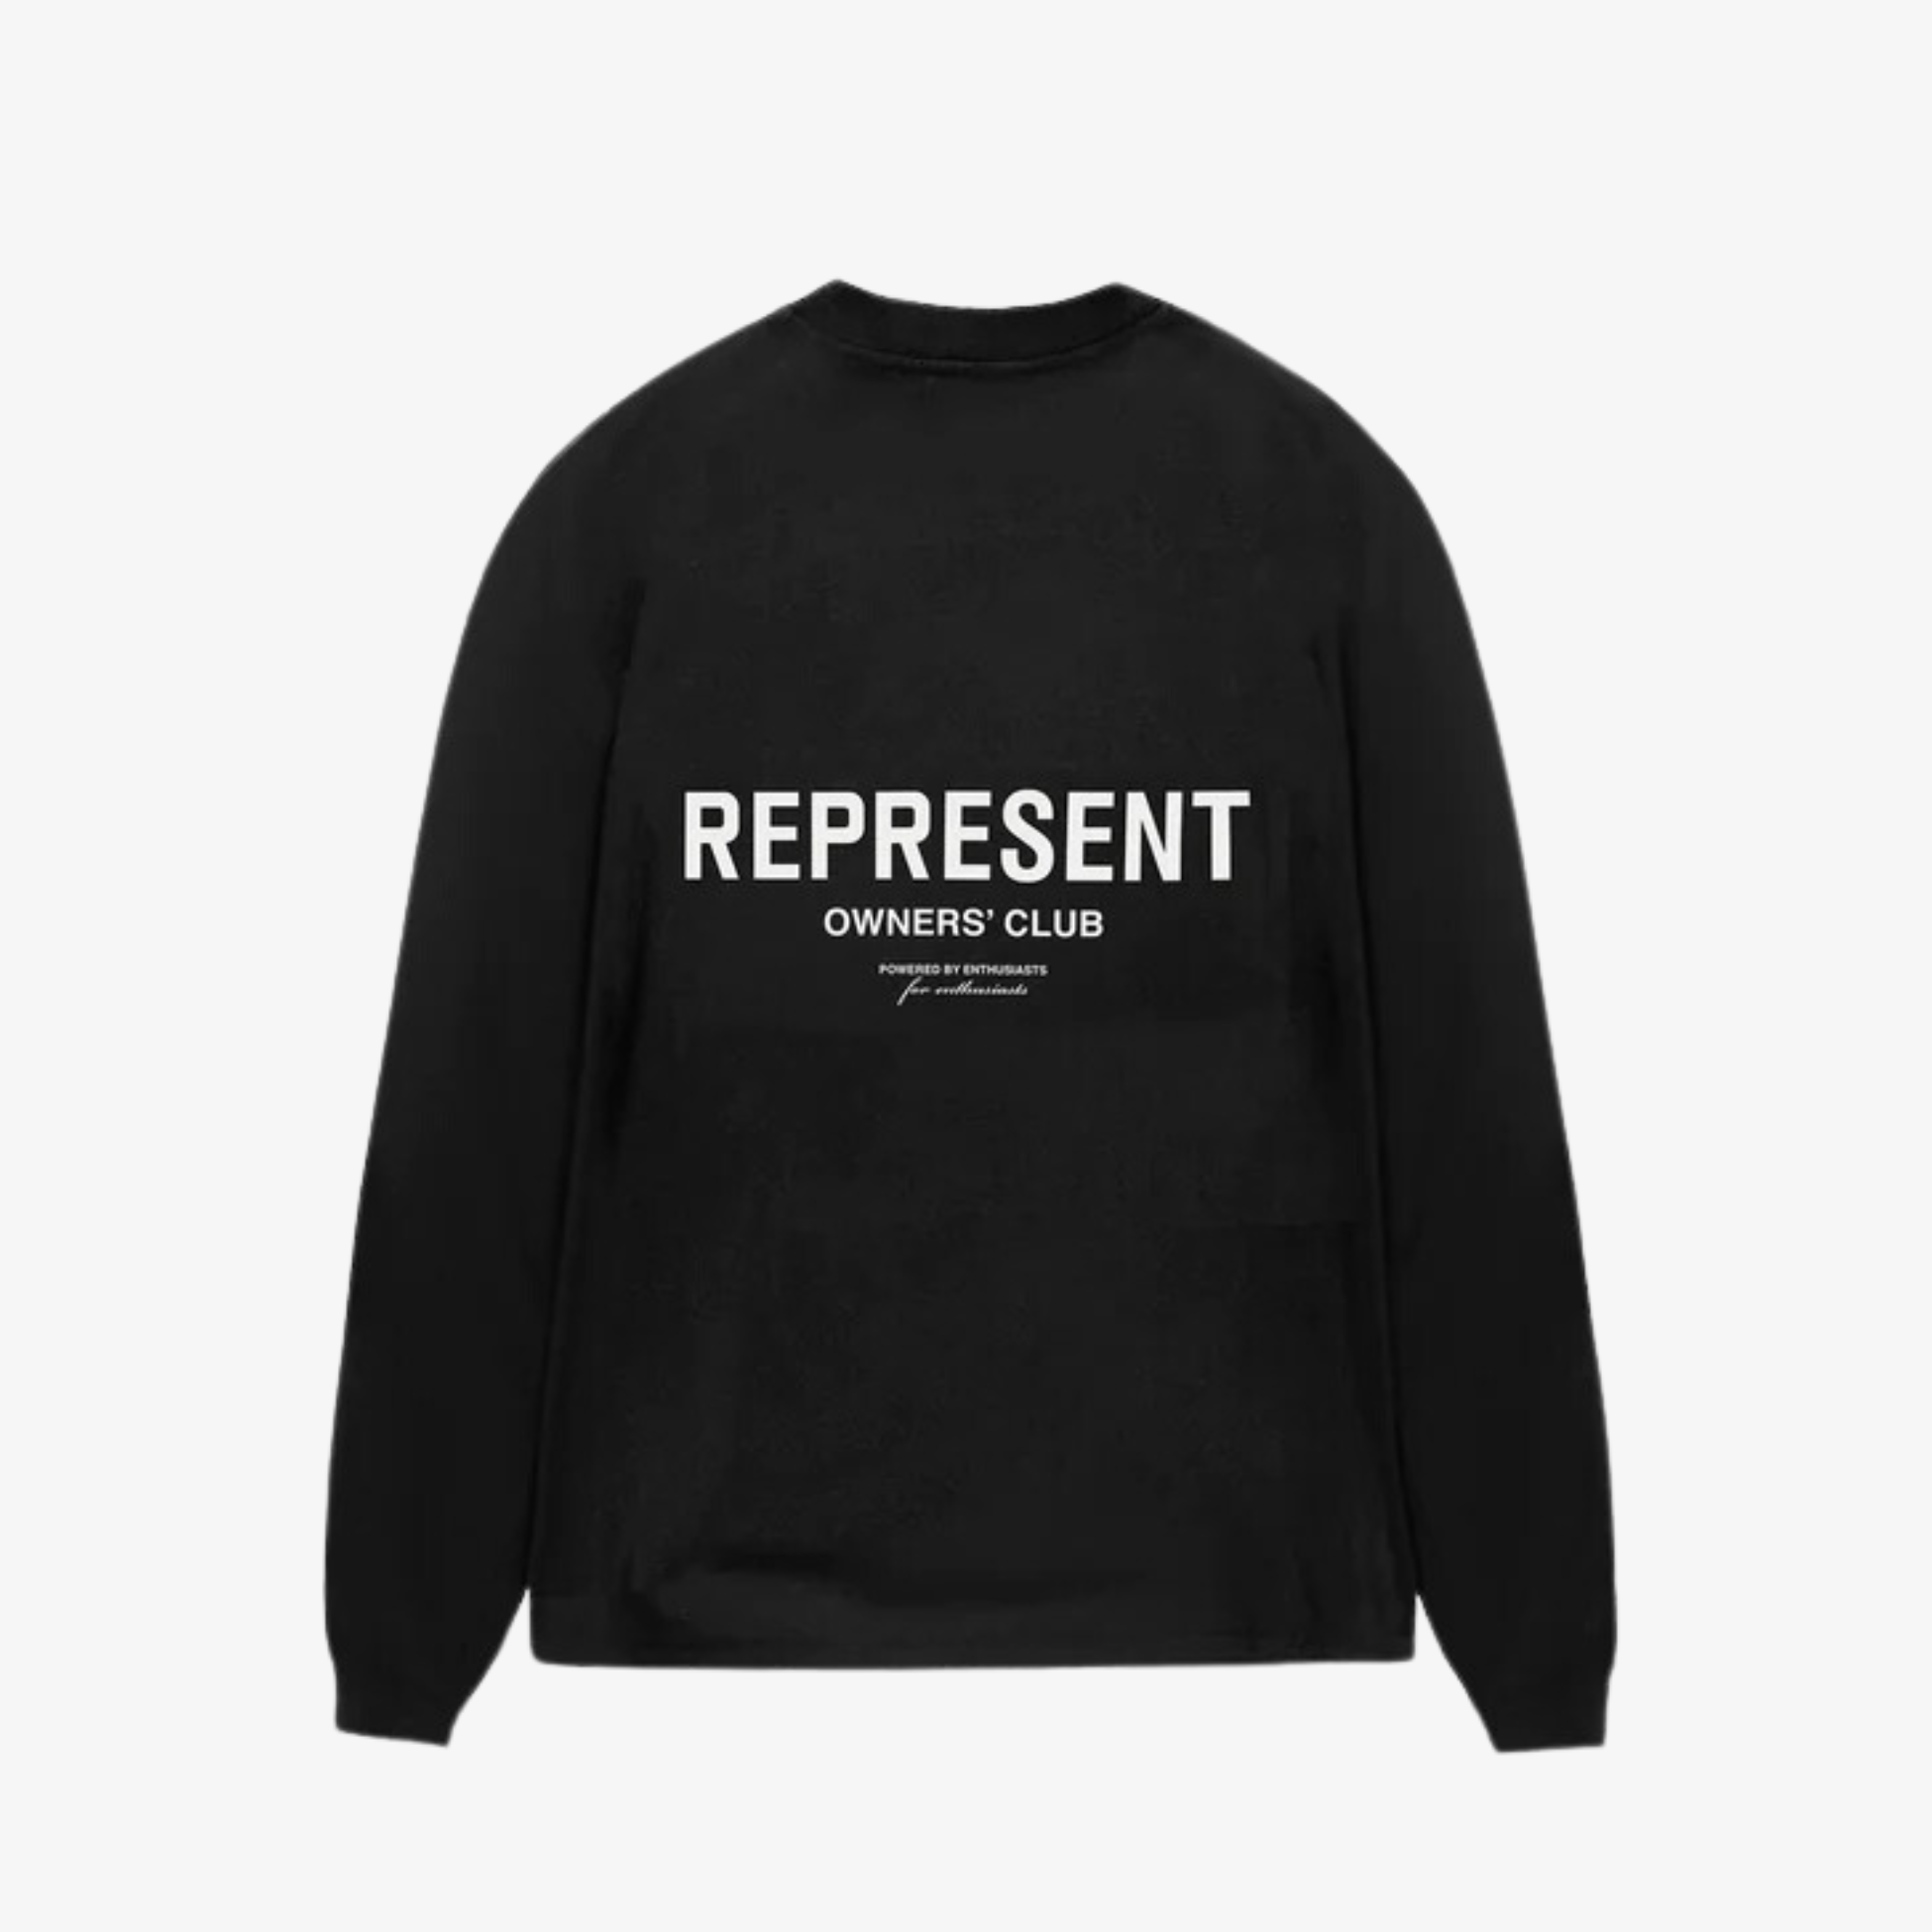 Represent Owners’ Club Long Sleeve T-Shirt Black